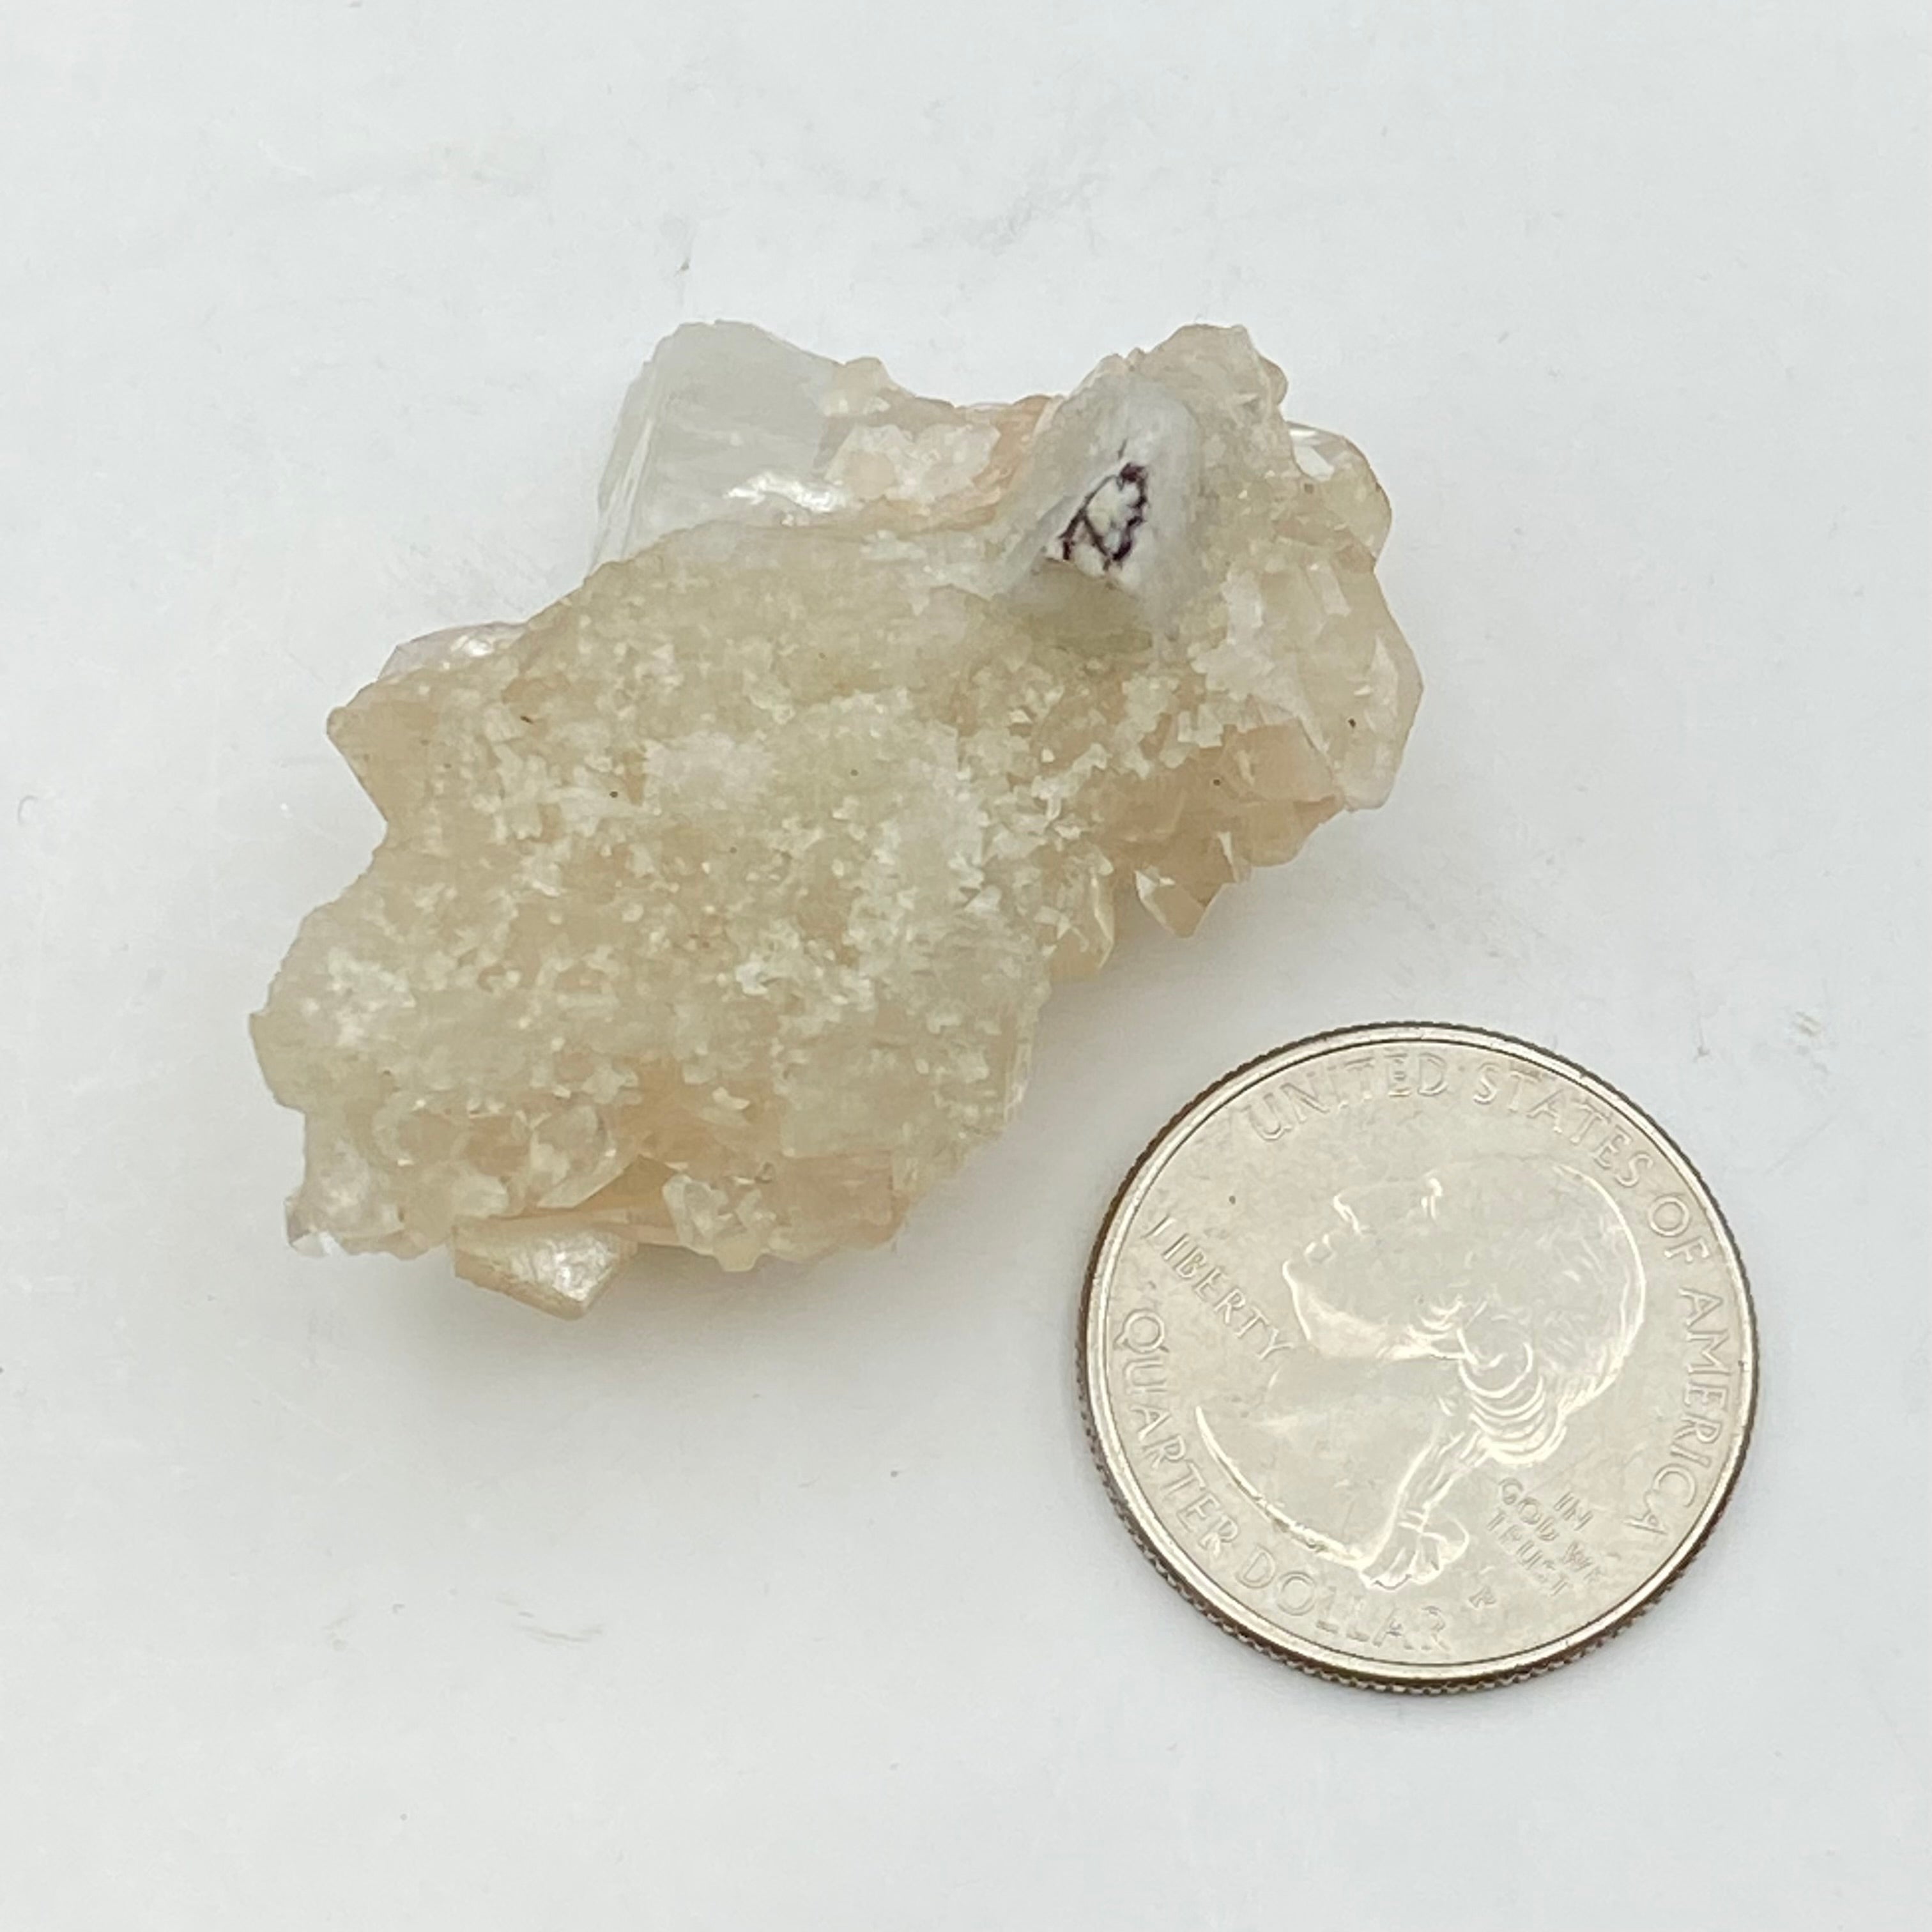 Apophyllite Crystal - 203